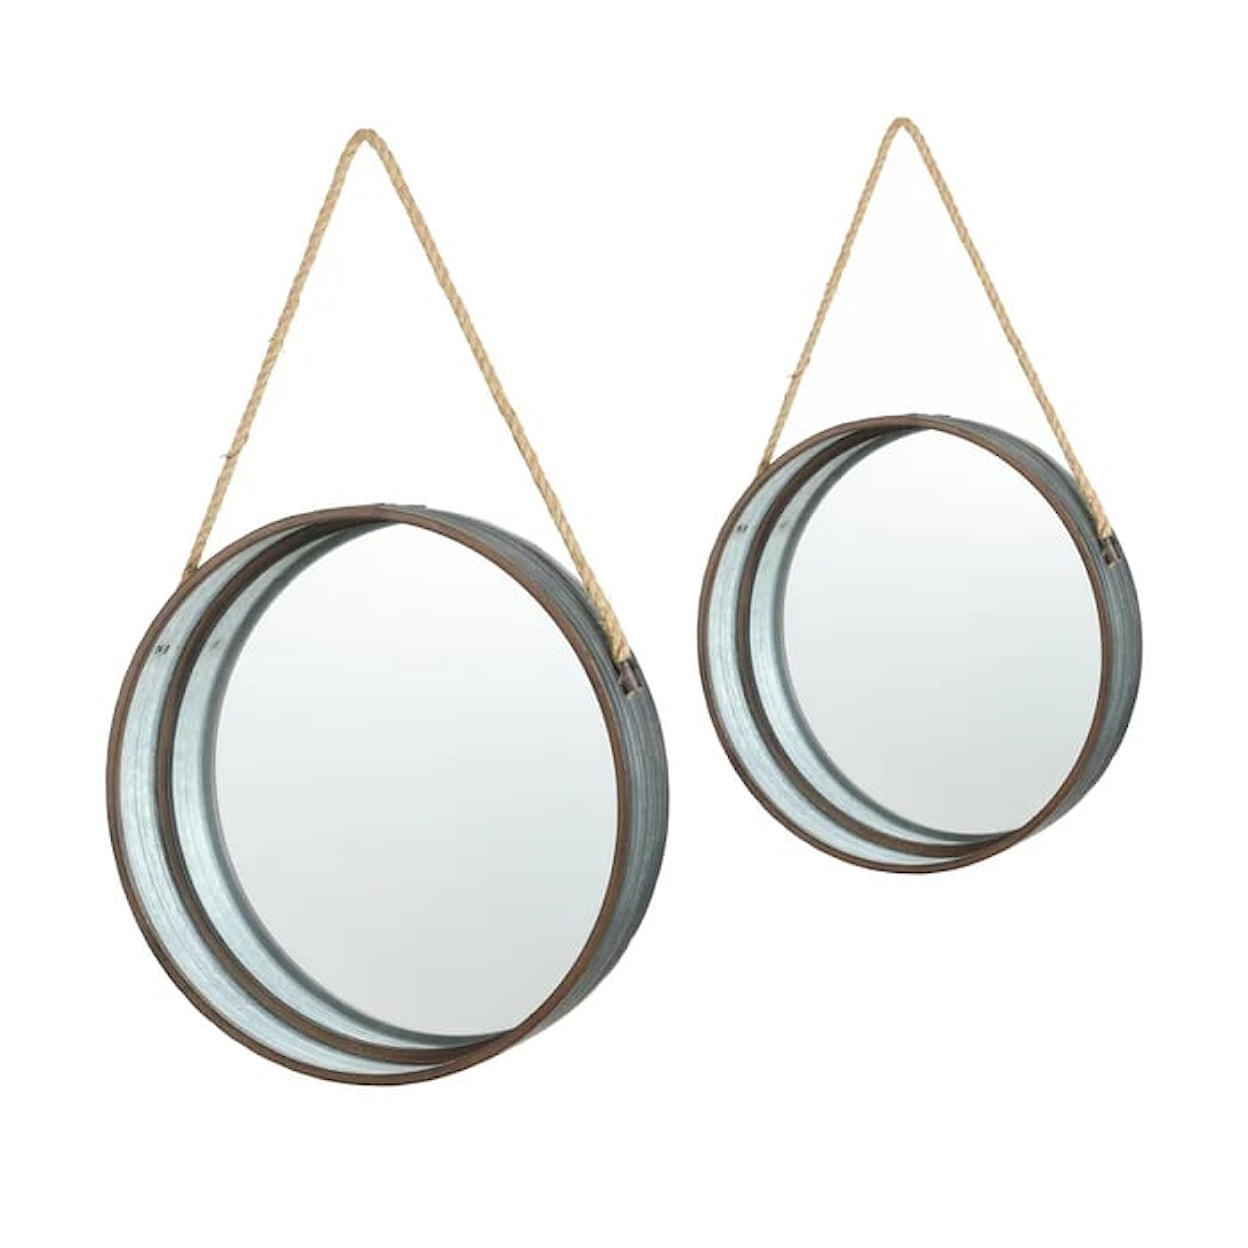 StyleCraft Accessories Set of 2 Metal Wall Mirrors